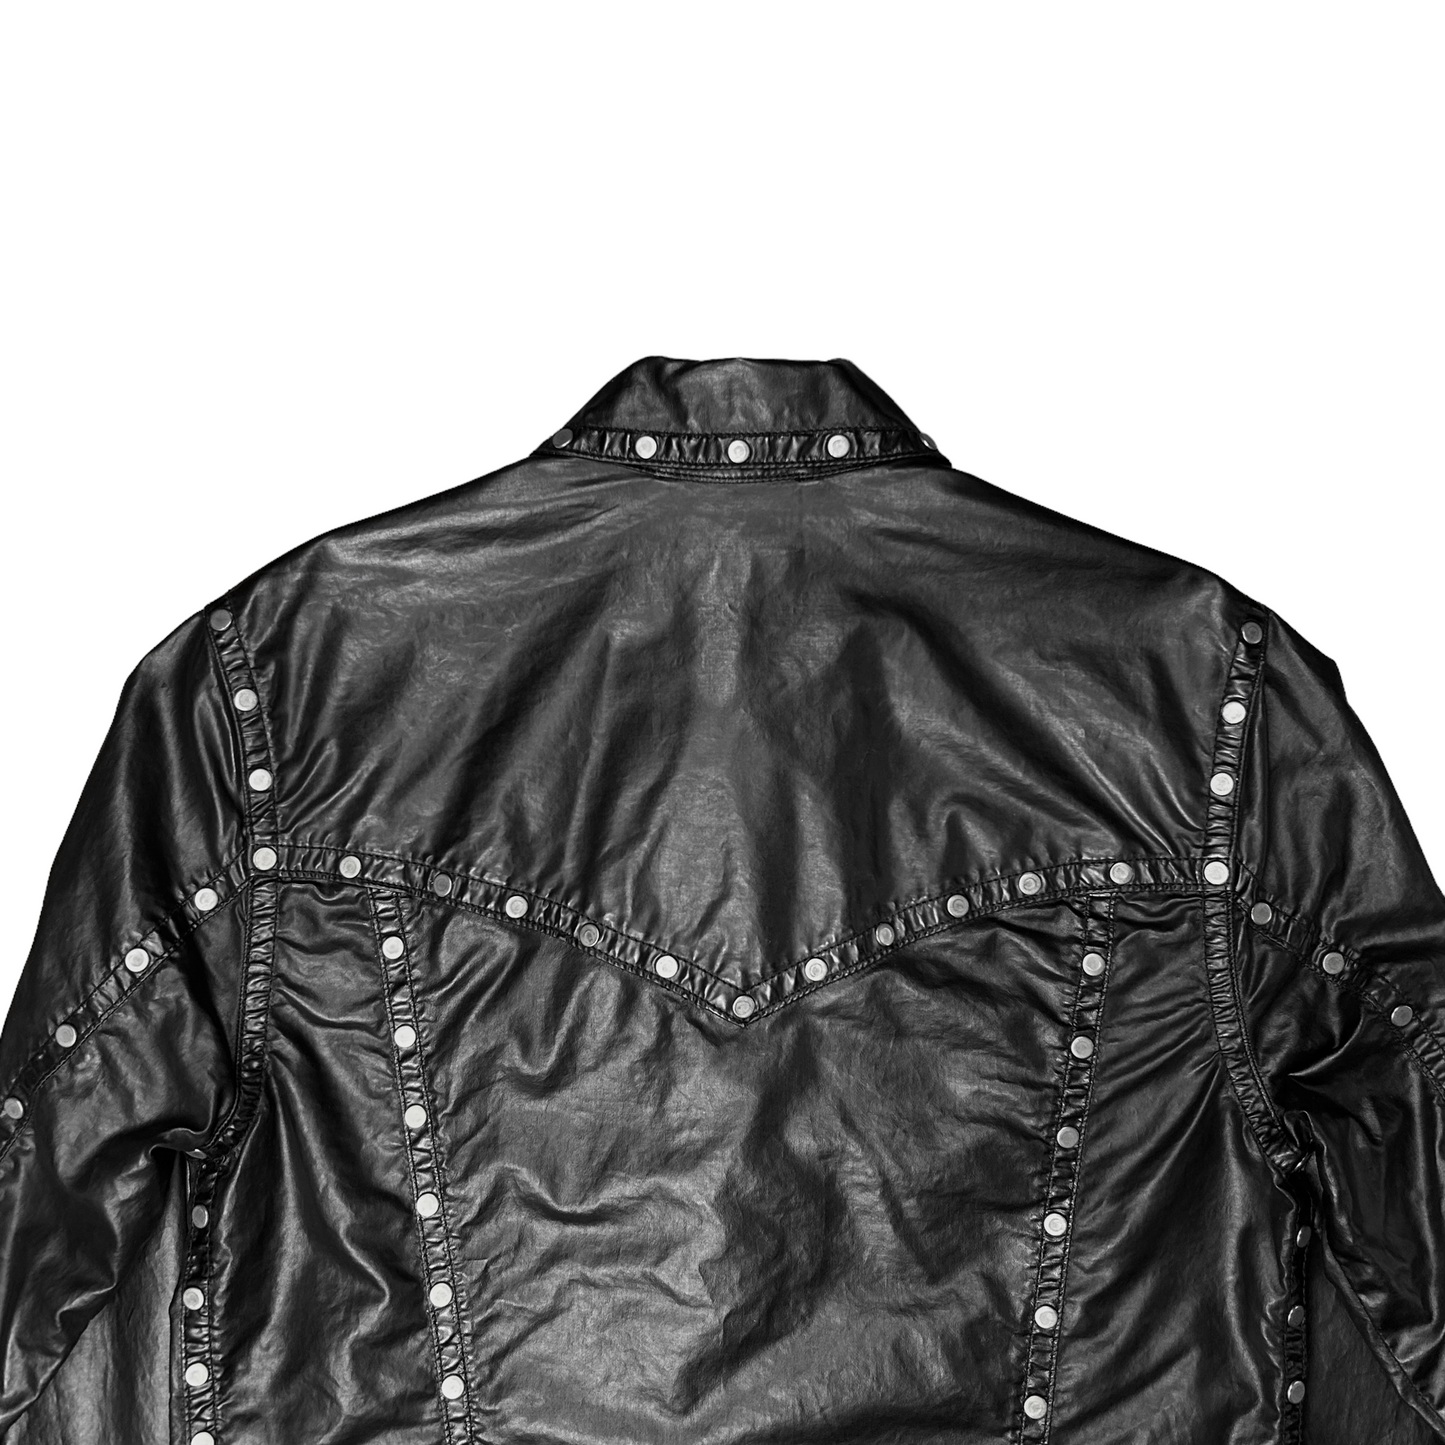 Dries Van Noten Studded Vegan Leather Jacket - AW18